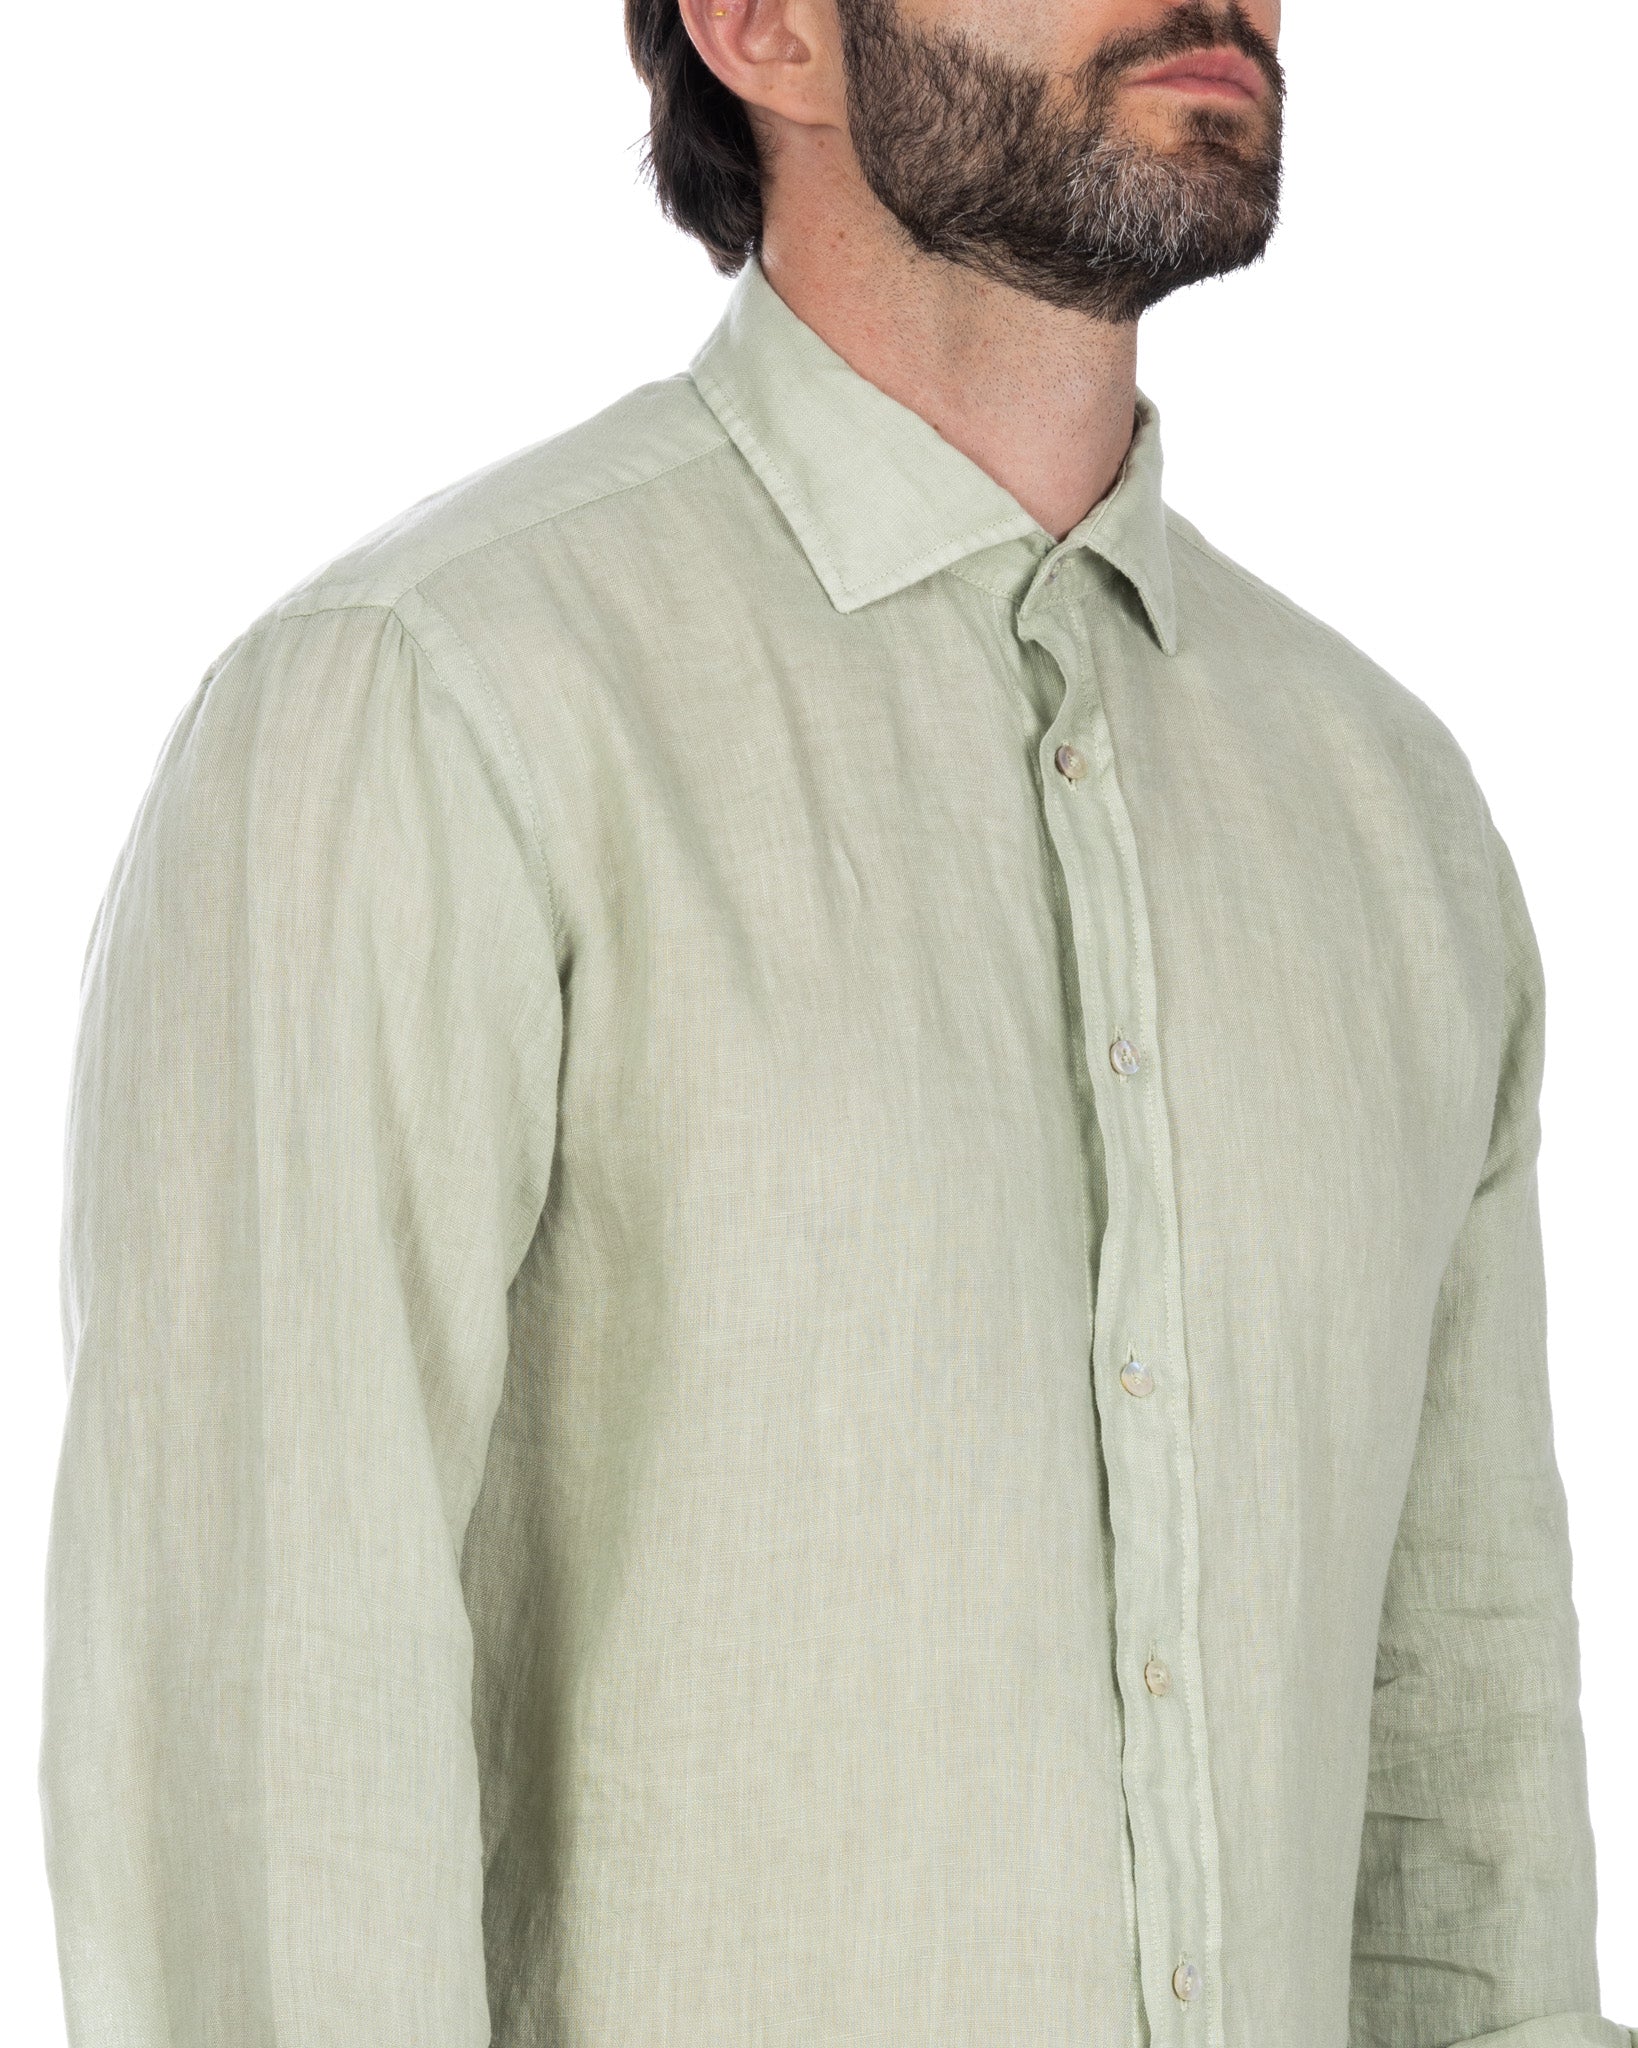 Montecarlo - green pure linen shirt